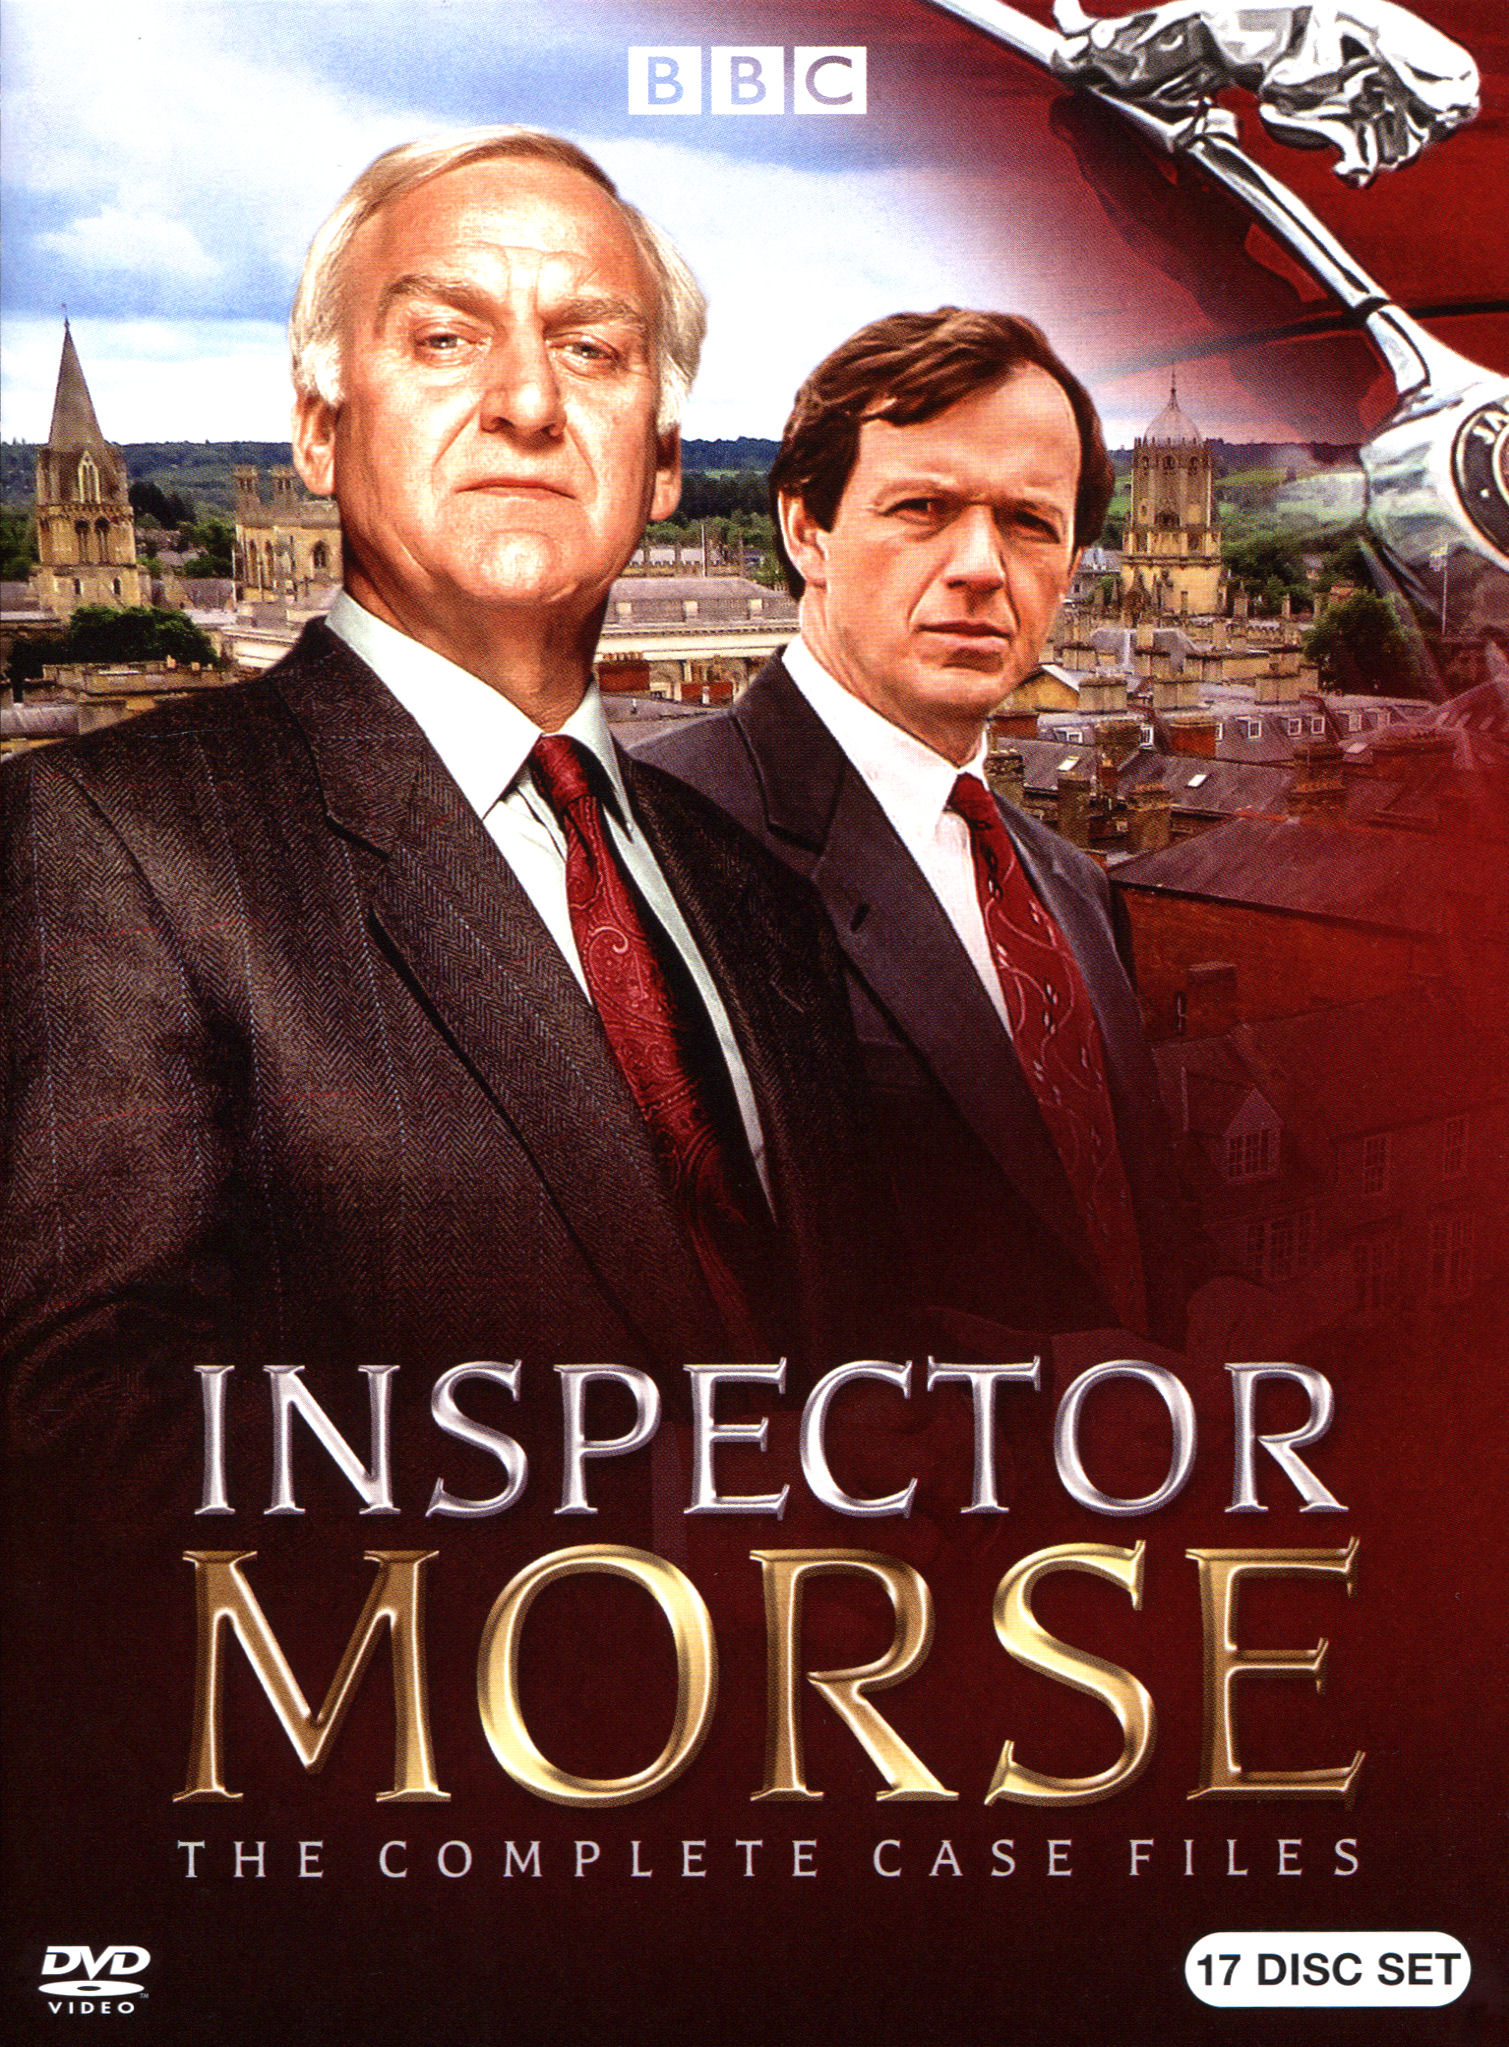 Inspector Morse DvD 16